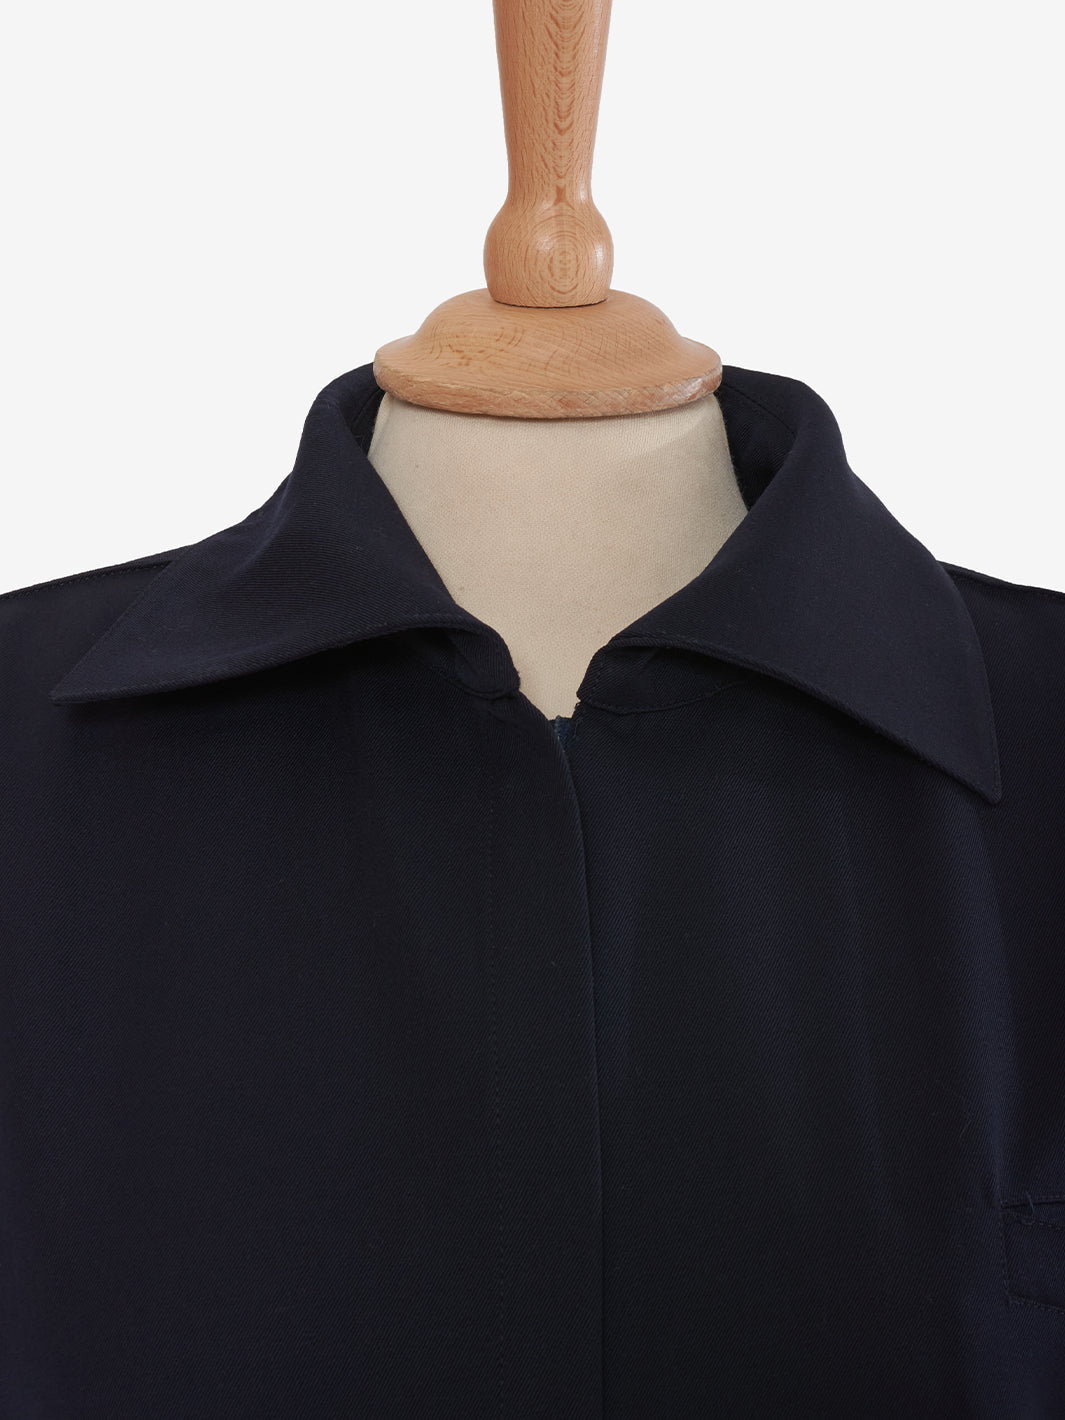 Gianni Versace Blue wool suit